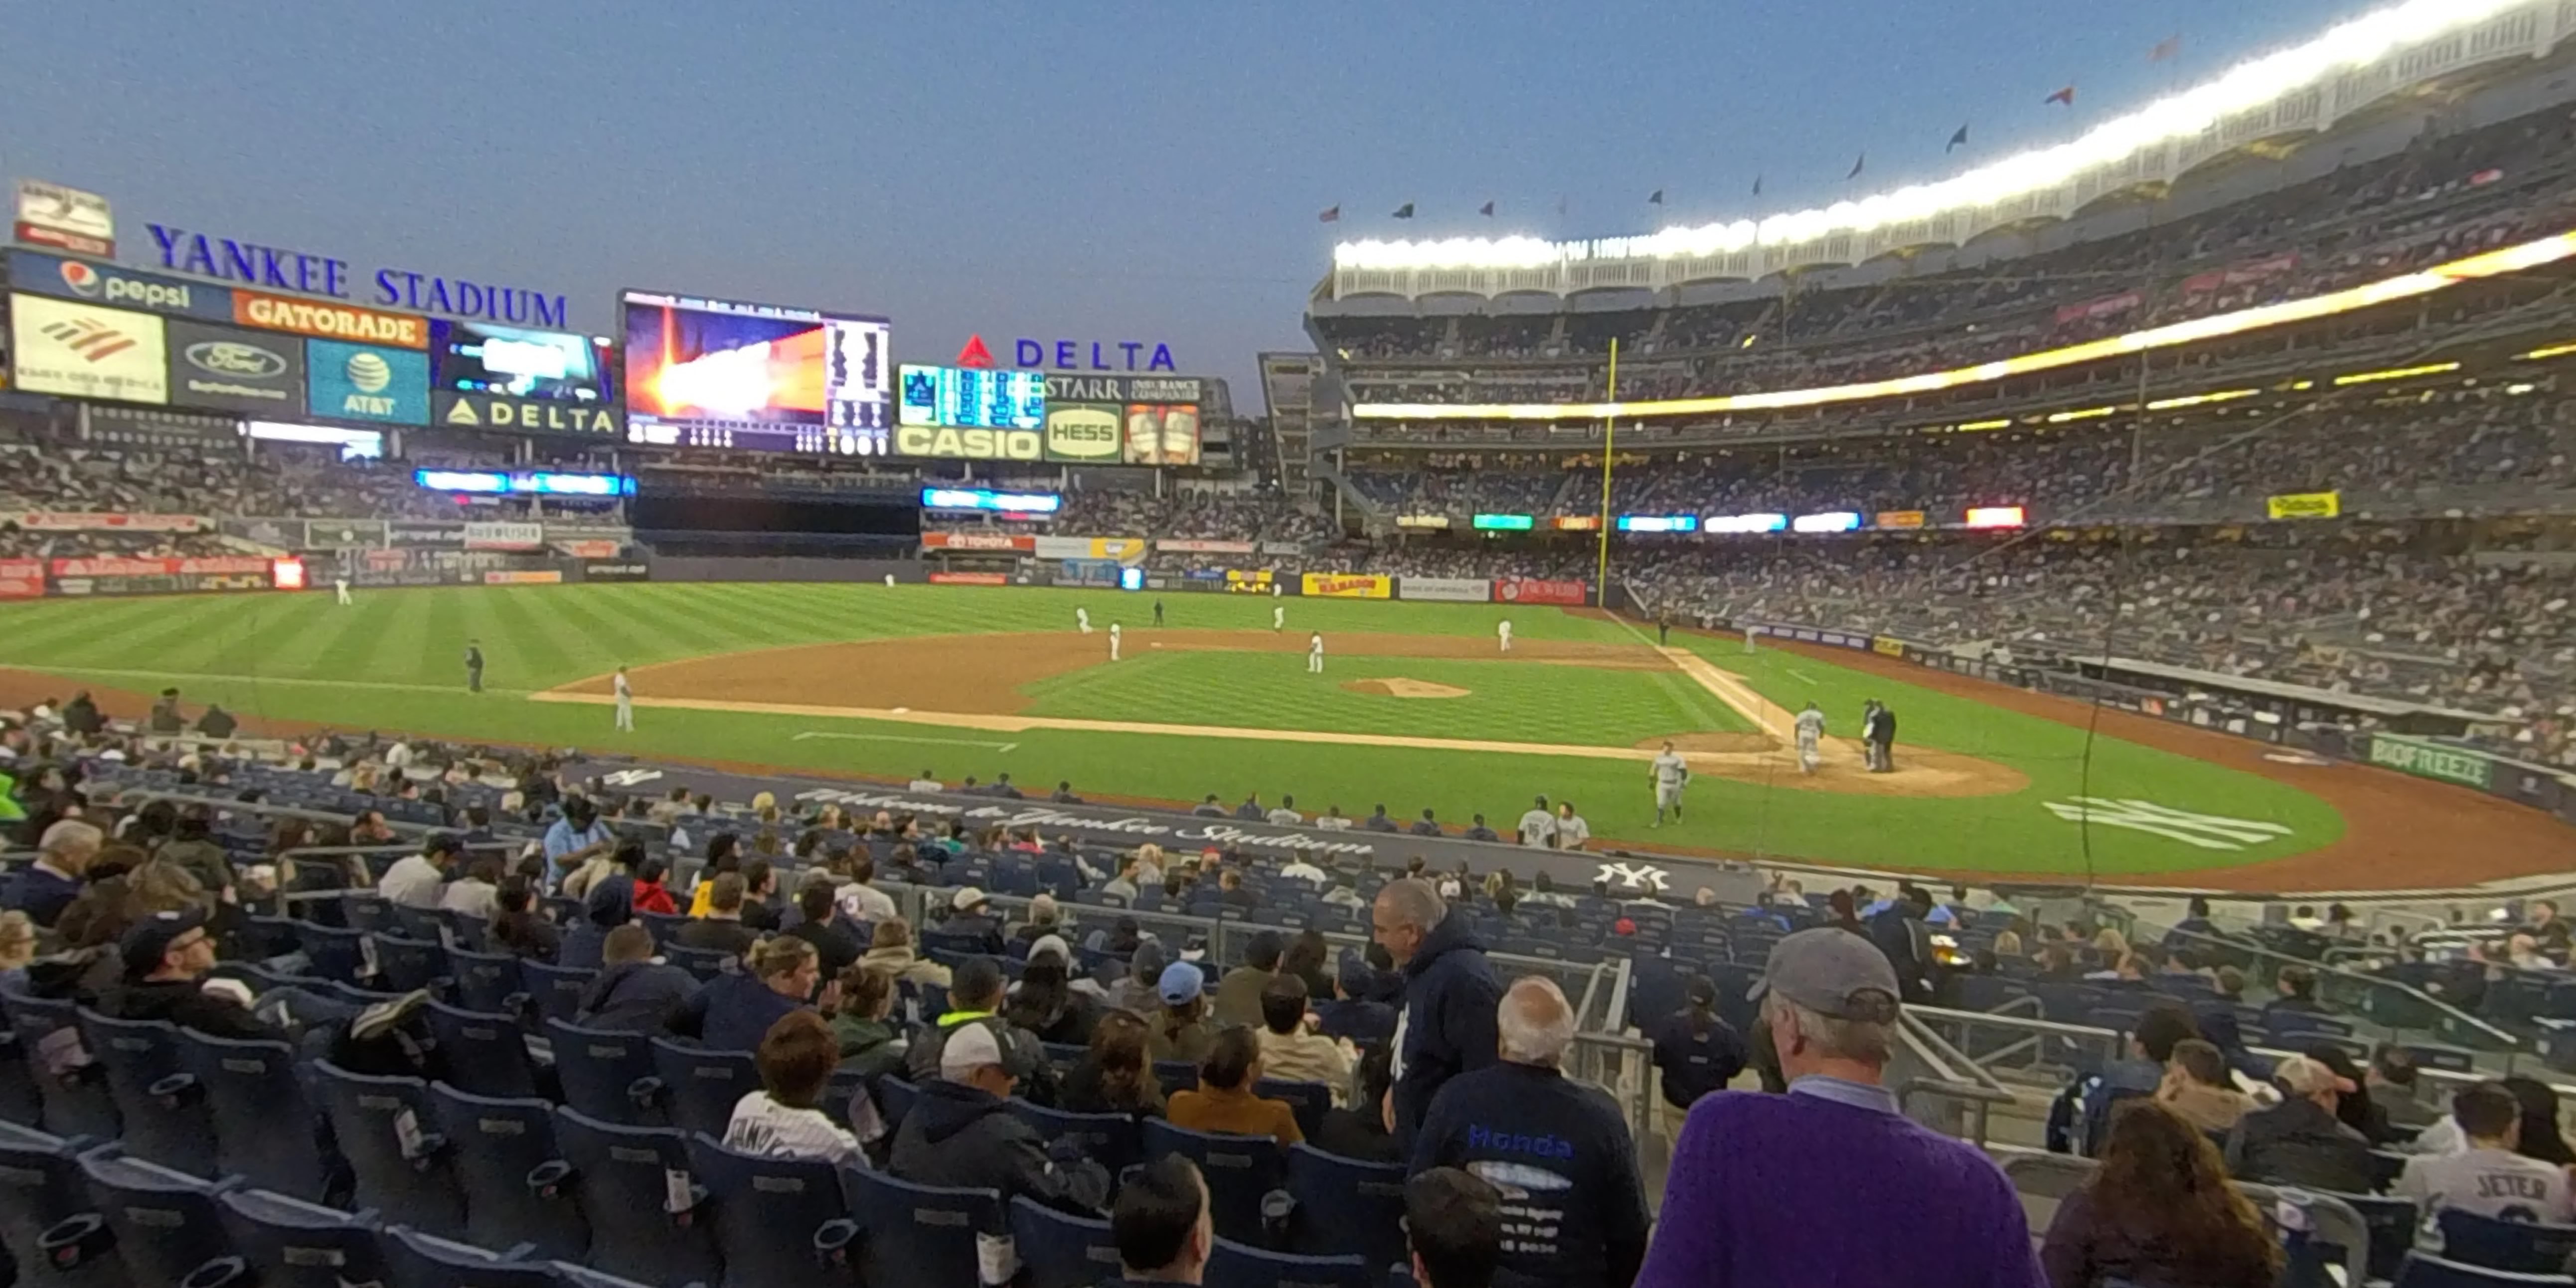 section 122 panoramic seat view  for baseball - yankee stadium